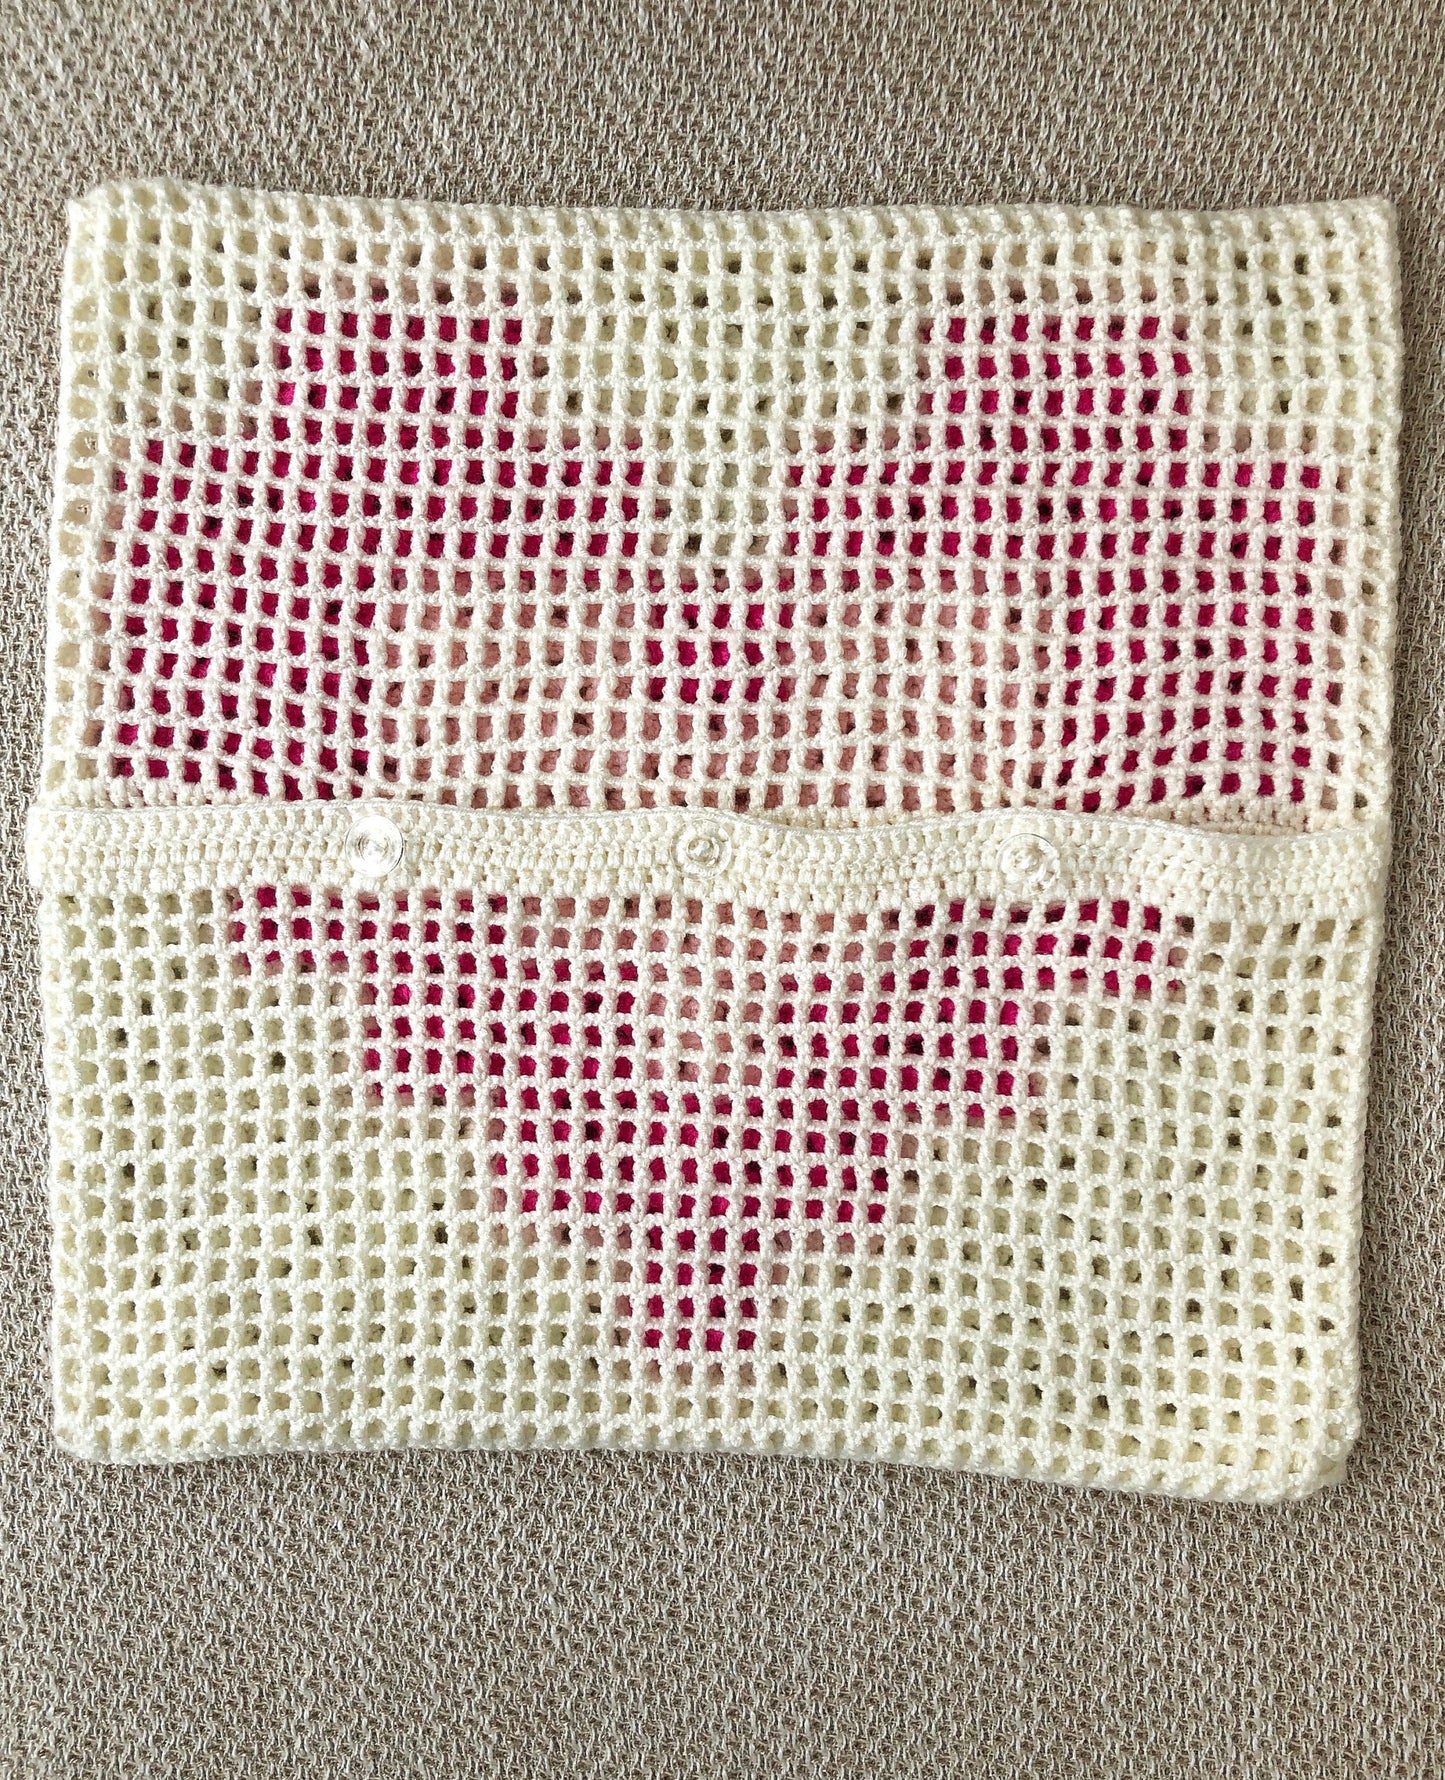 Crochet Patchwork Heart Cushion Cover